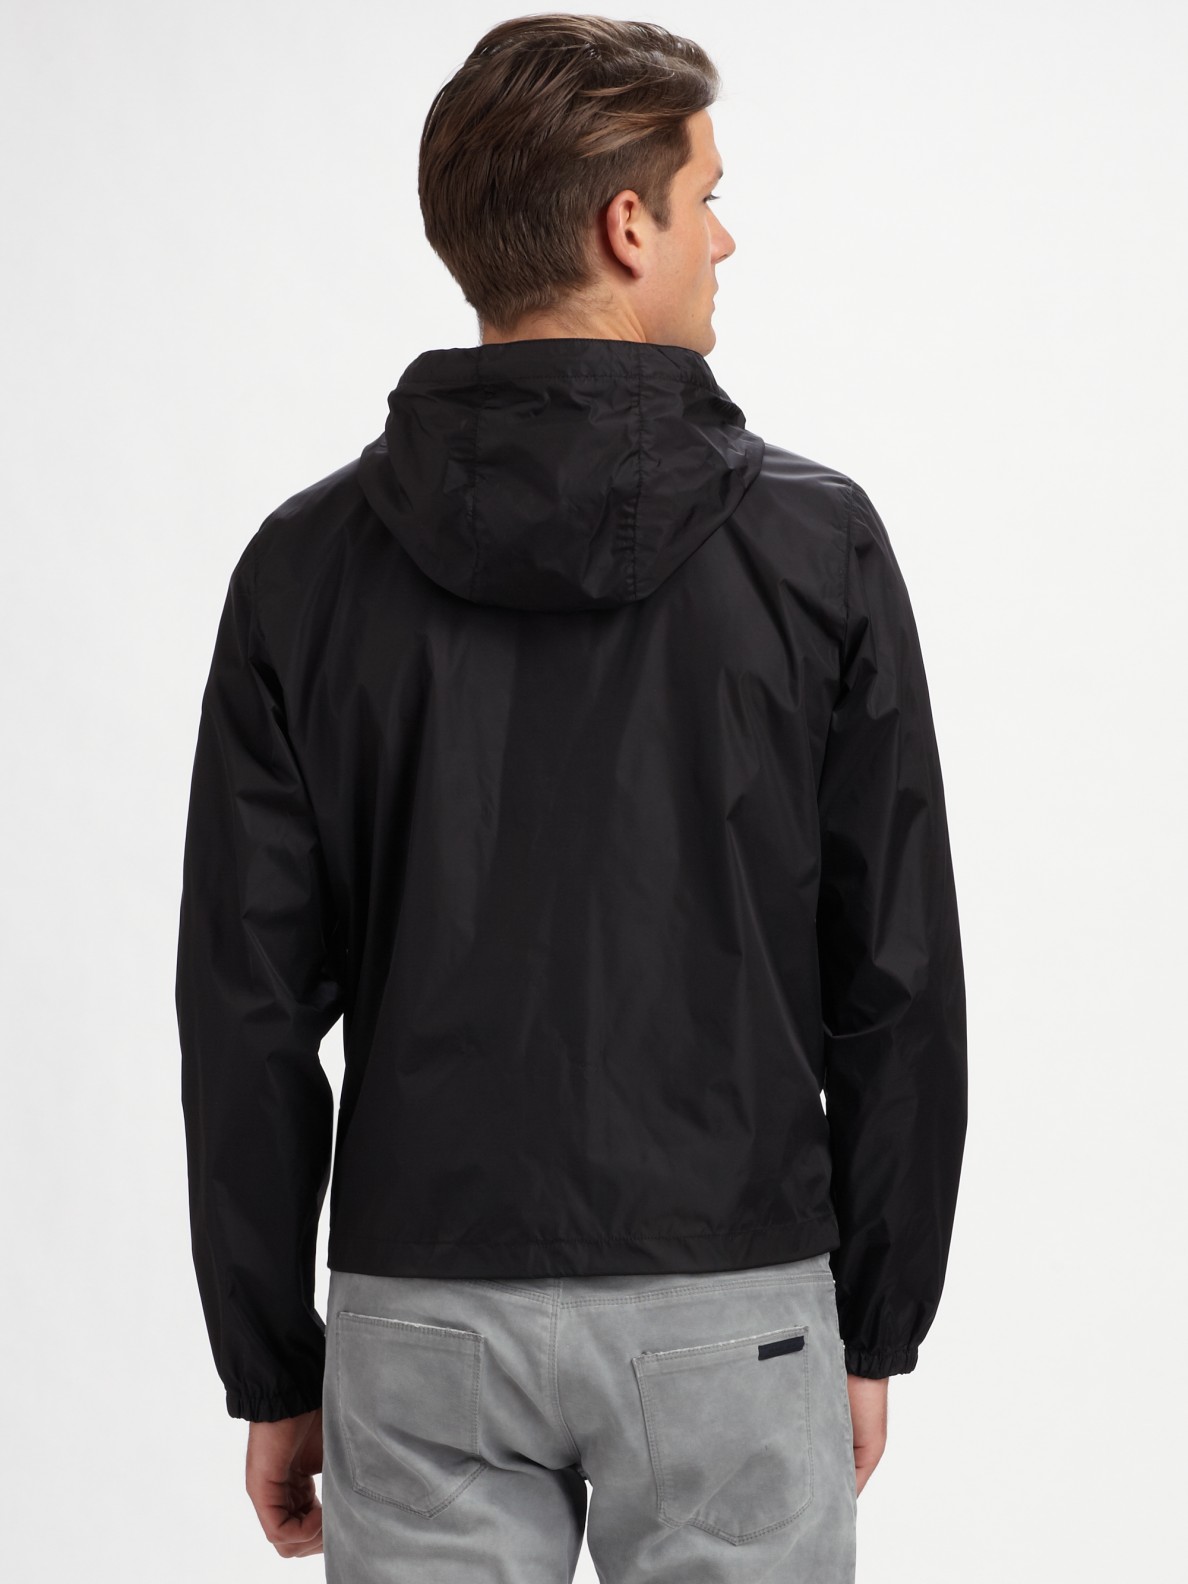 Lyst - Prada Nylon Logo Jacket in Black for Men